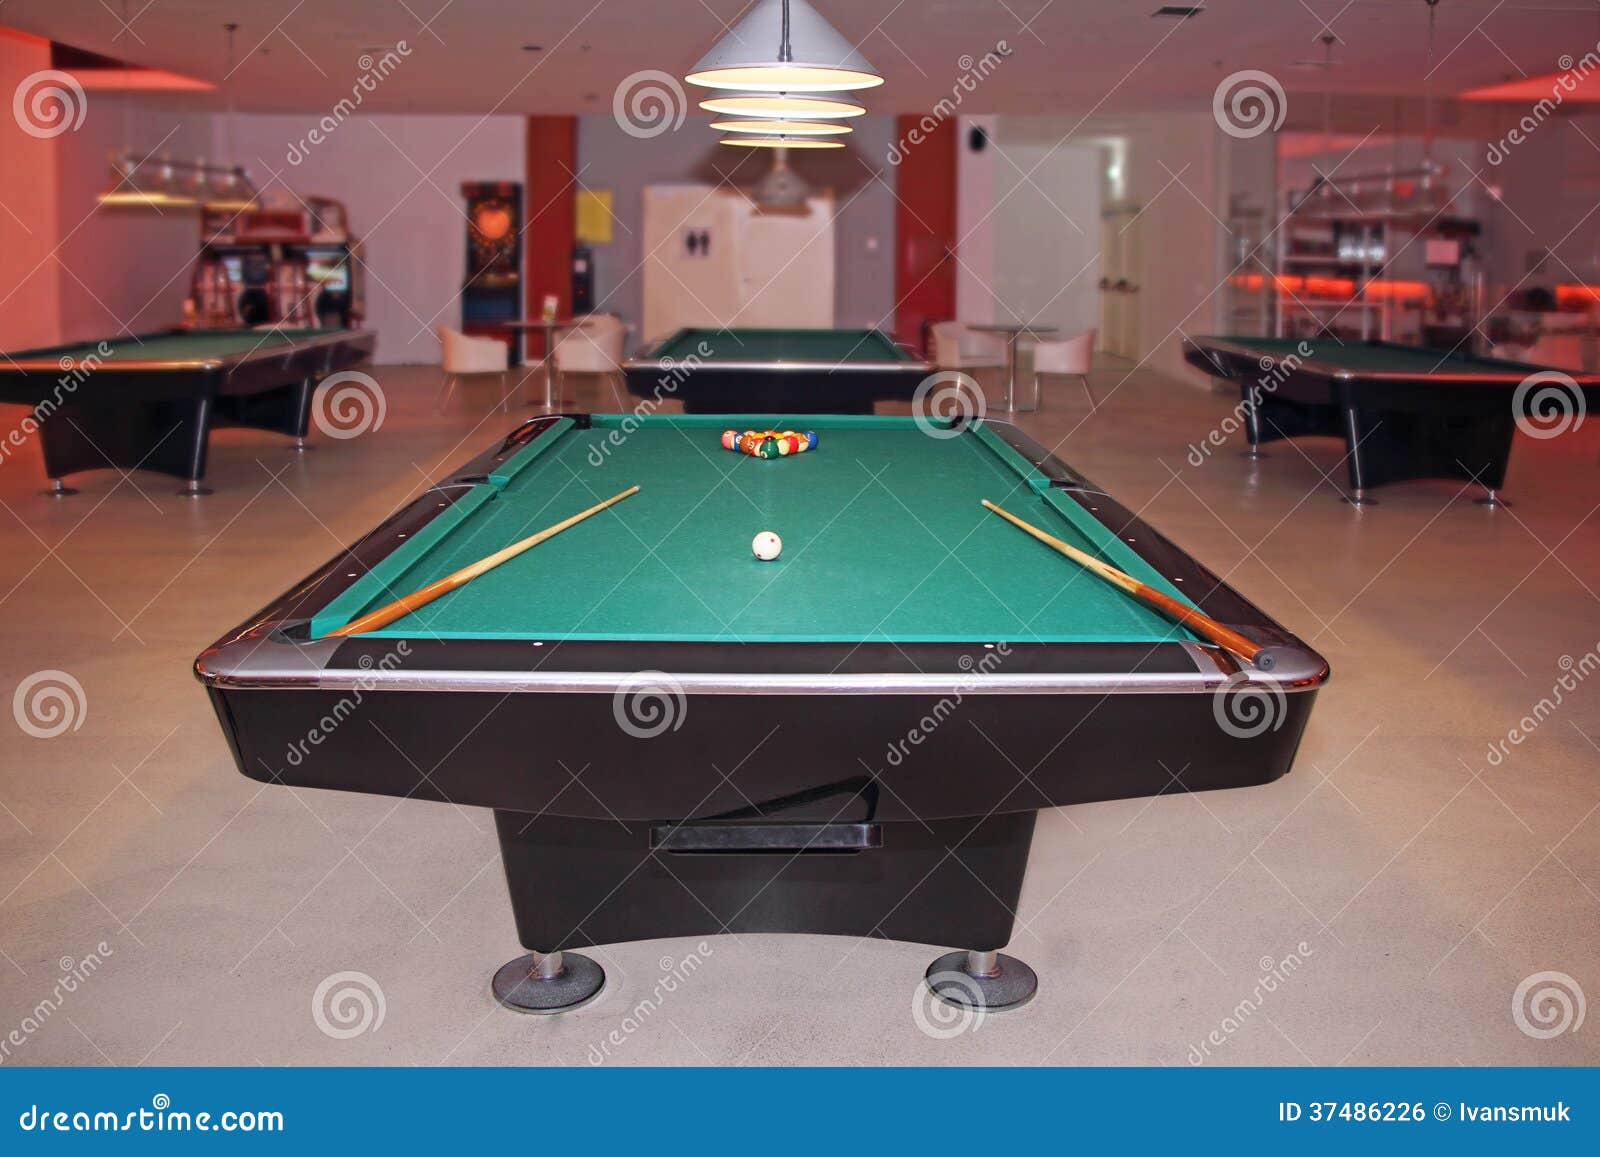 Free pool hall business plan